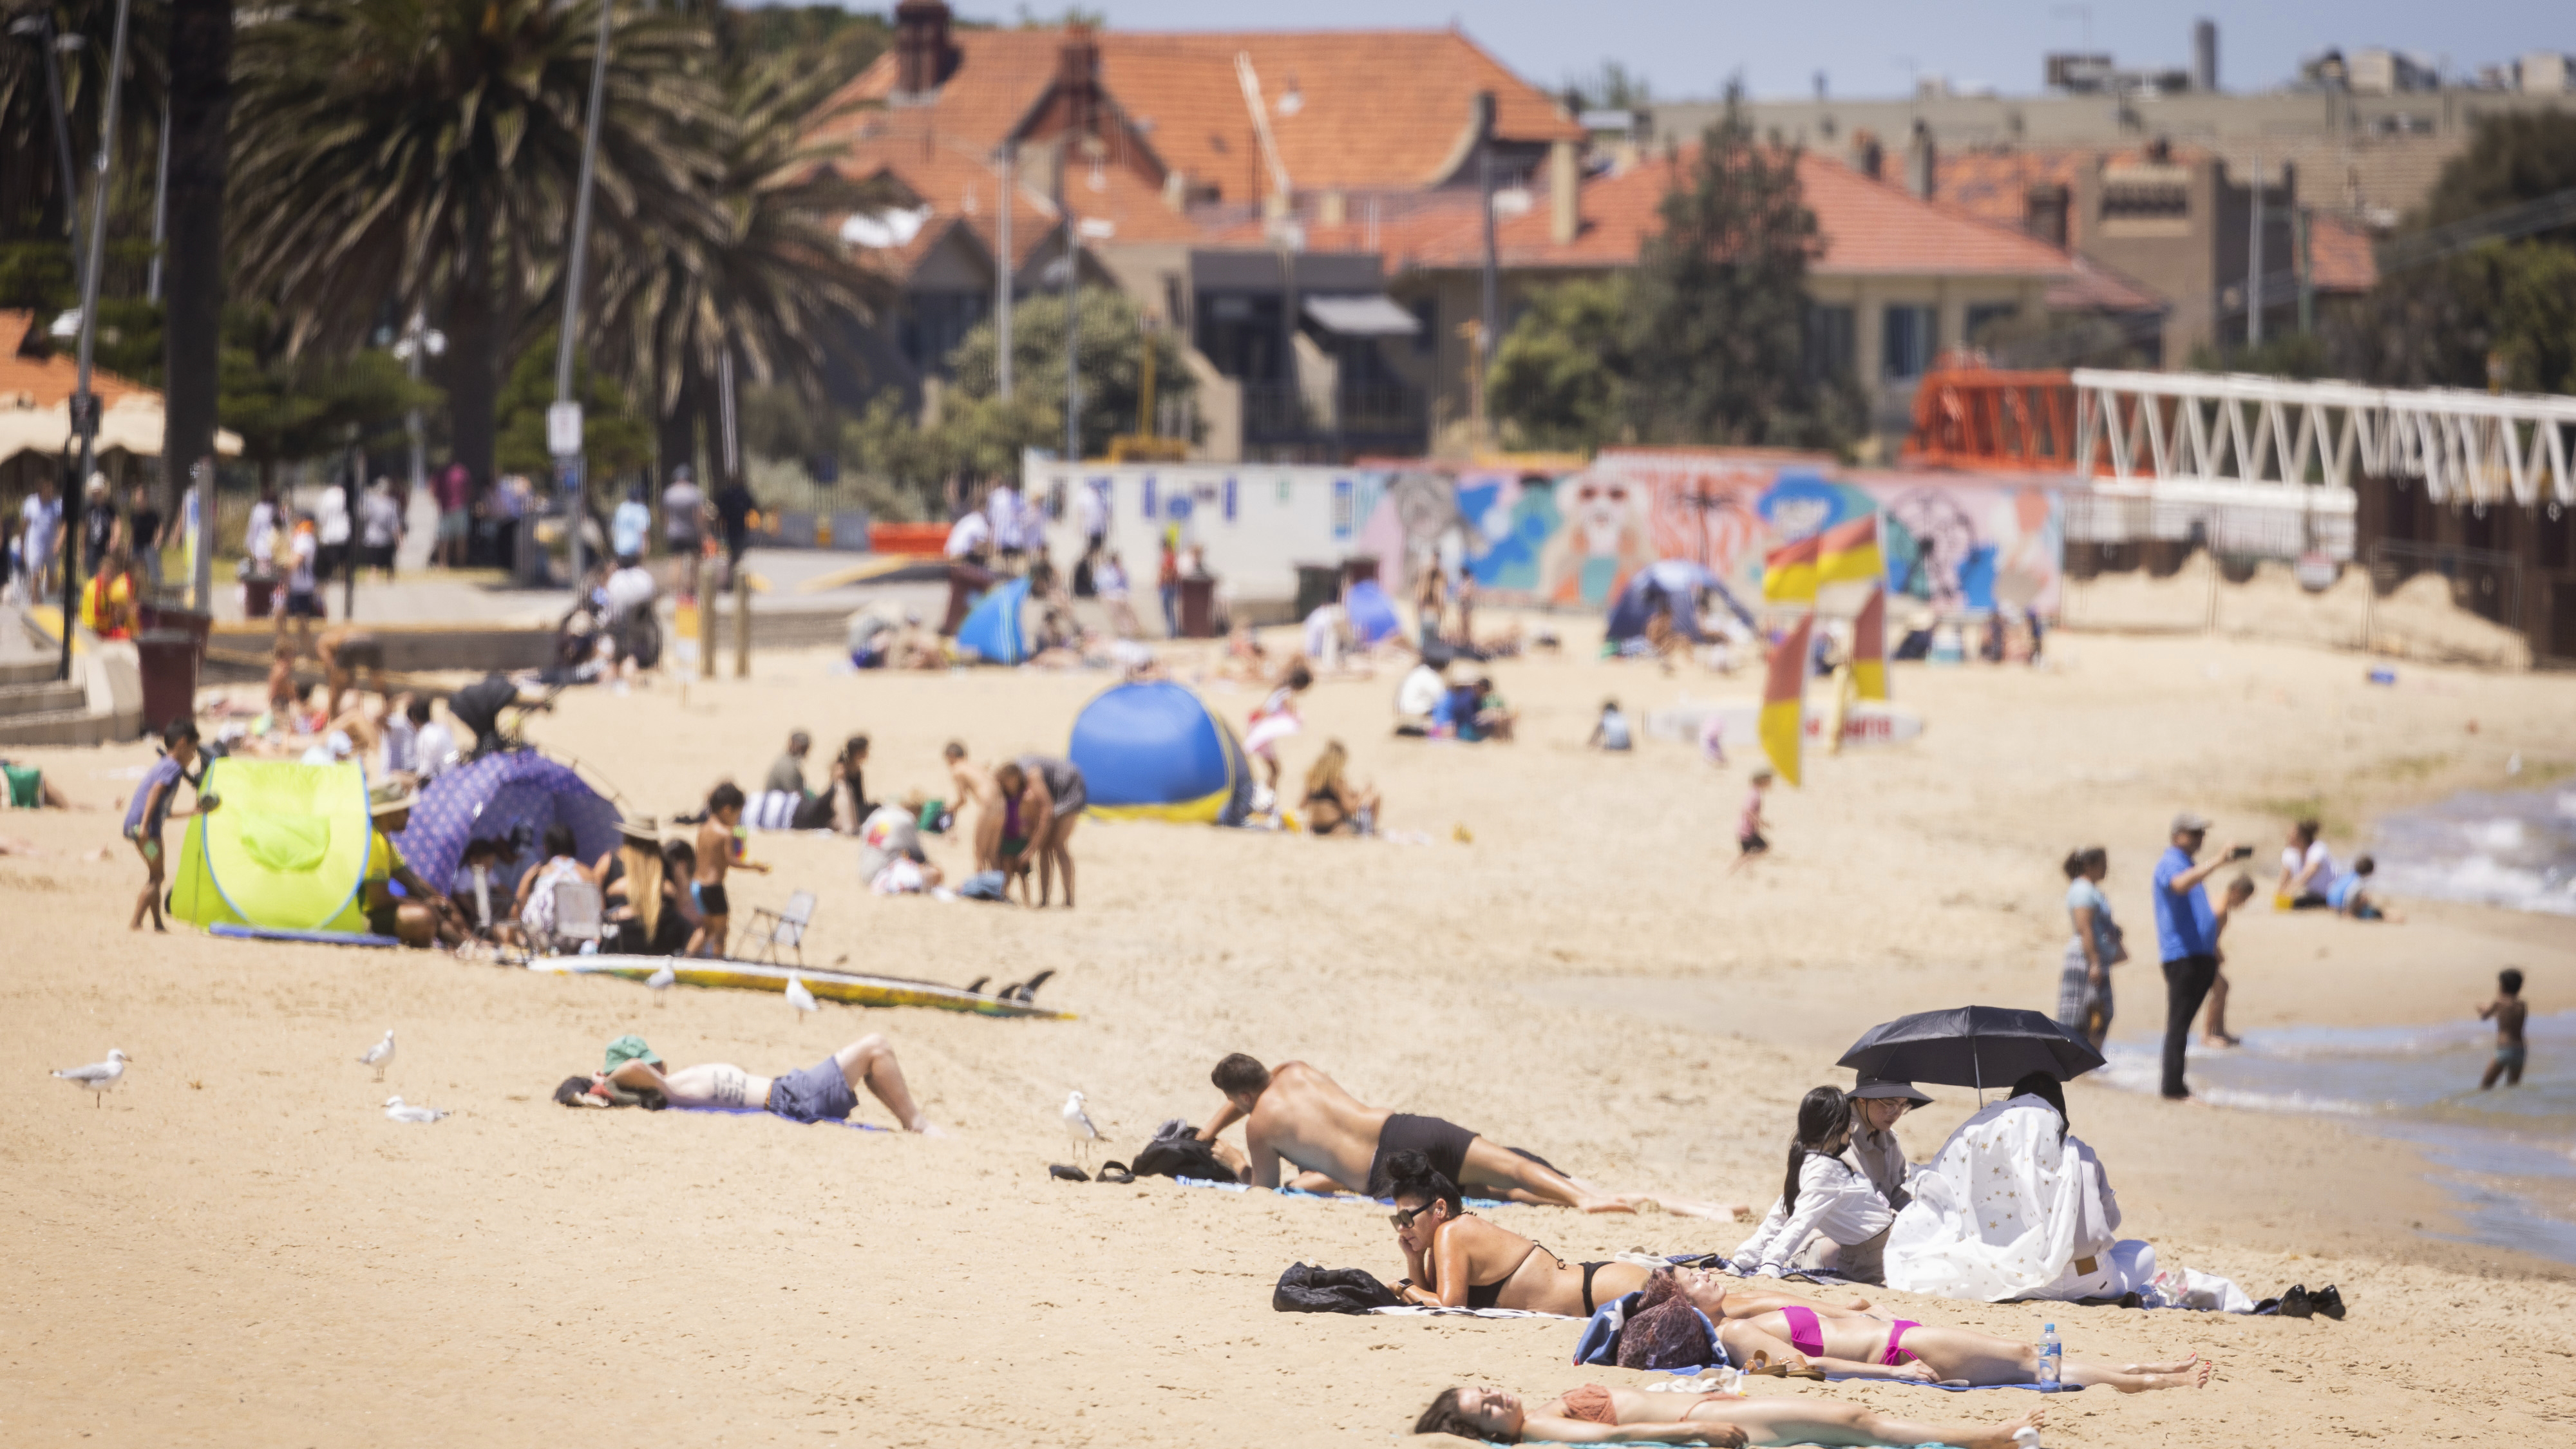 People enjoying the warm weather on St Kilda Beach, Melbourne.